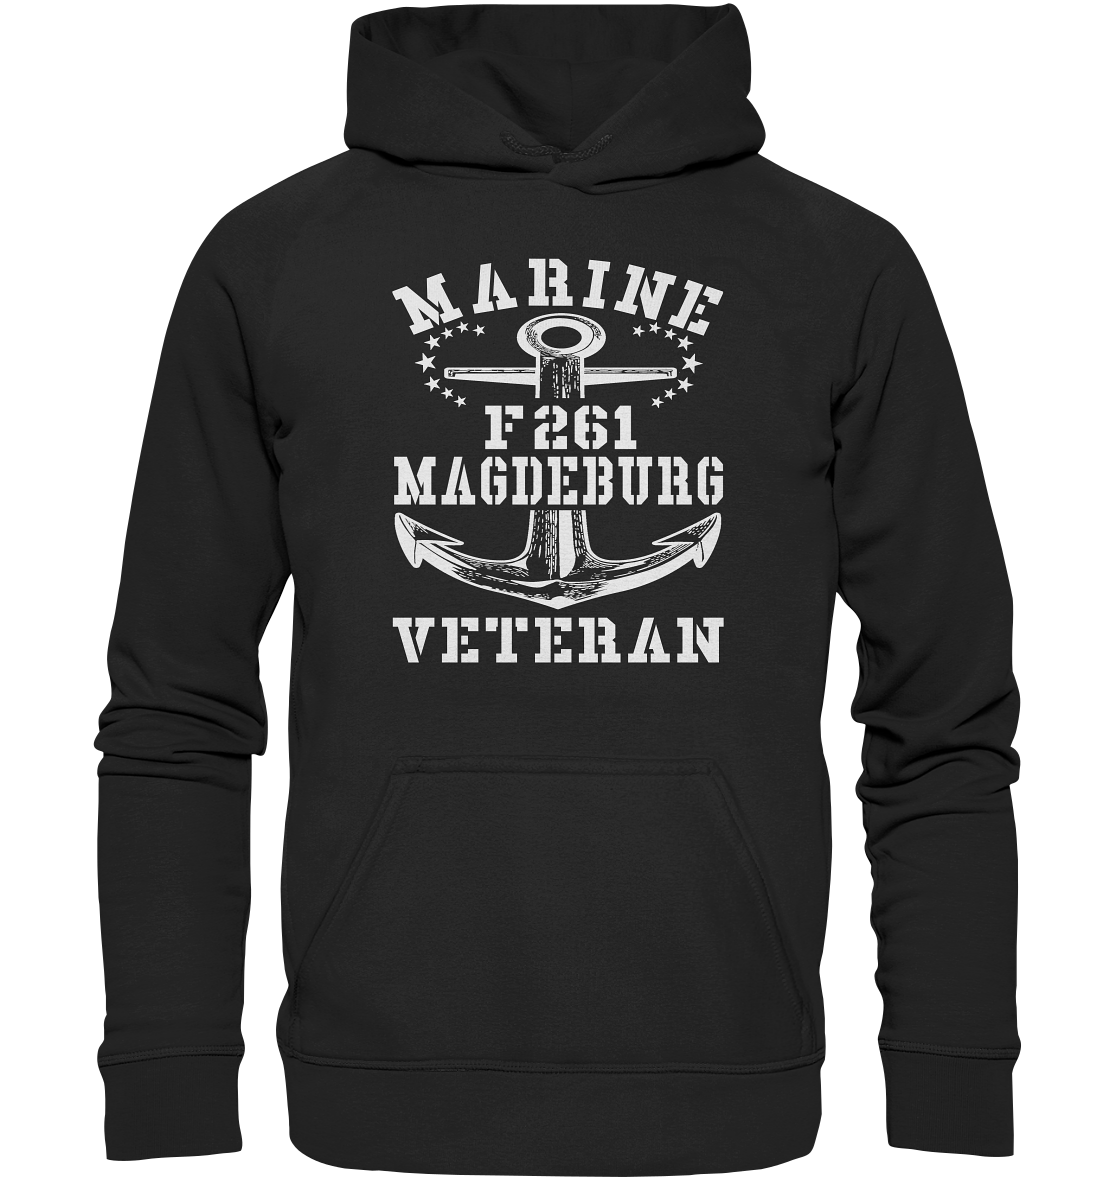 Korvette F261 MAGDEBURG Marine Veteran - Basic Unisex Hoodie